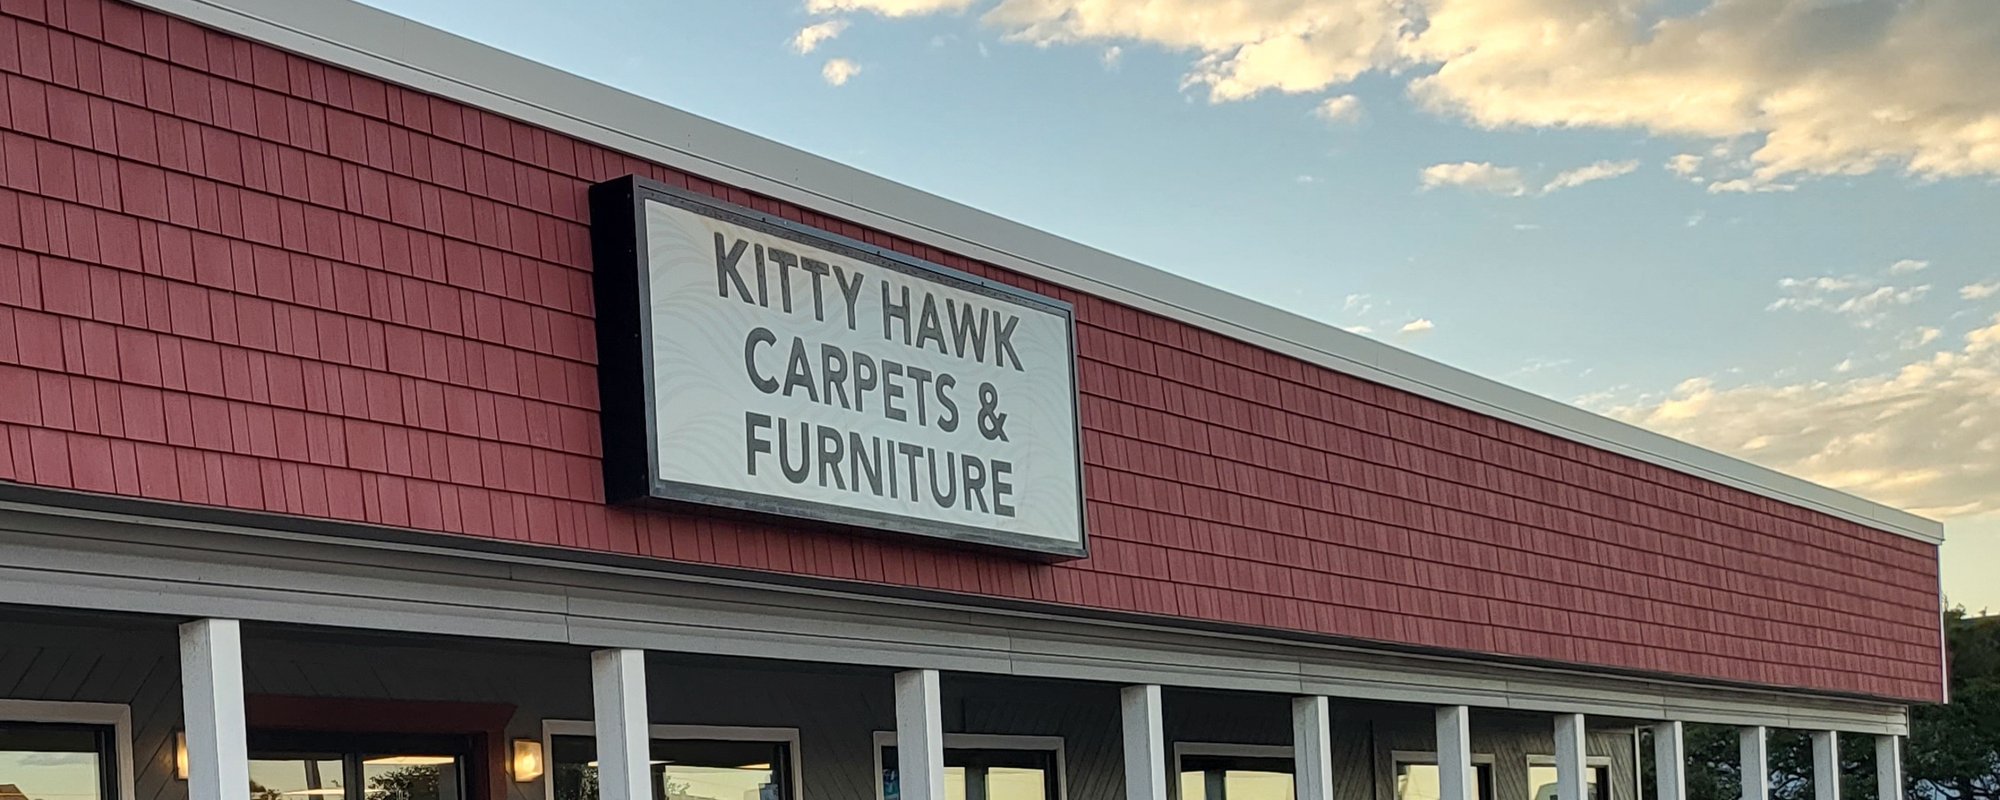 Kitty Hawk Carpets & Furniture storefront in Kitty Hawk, North Carolina